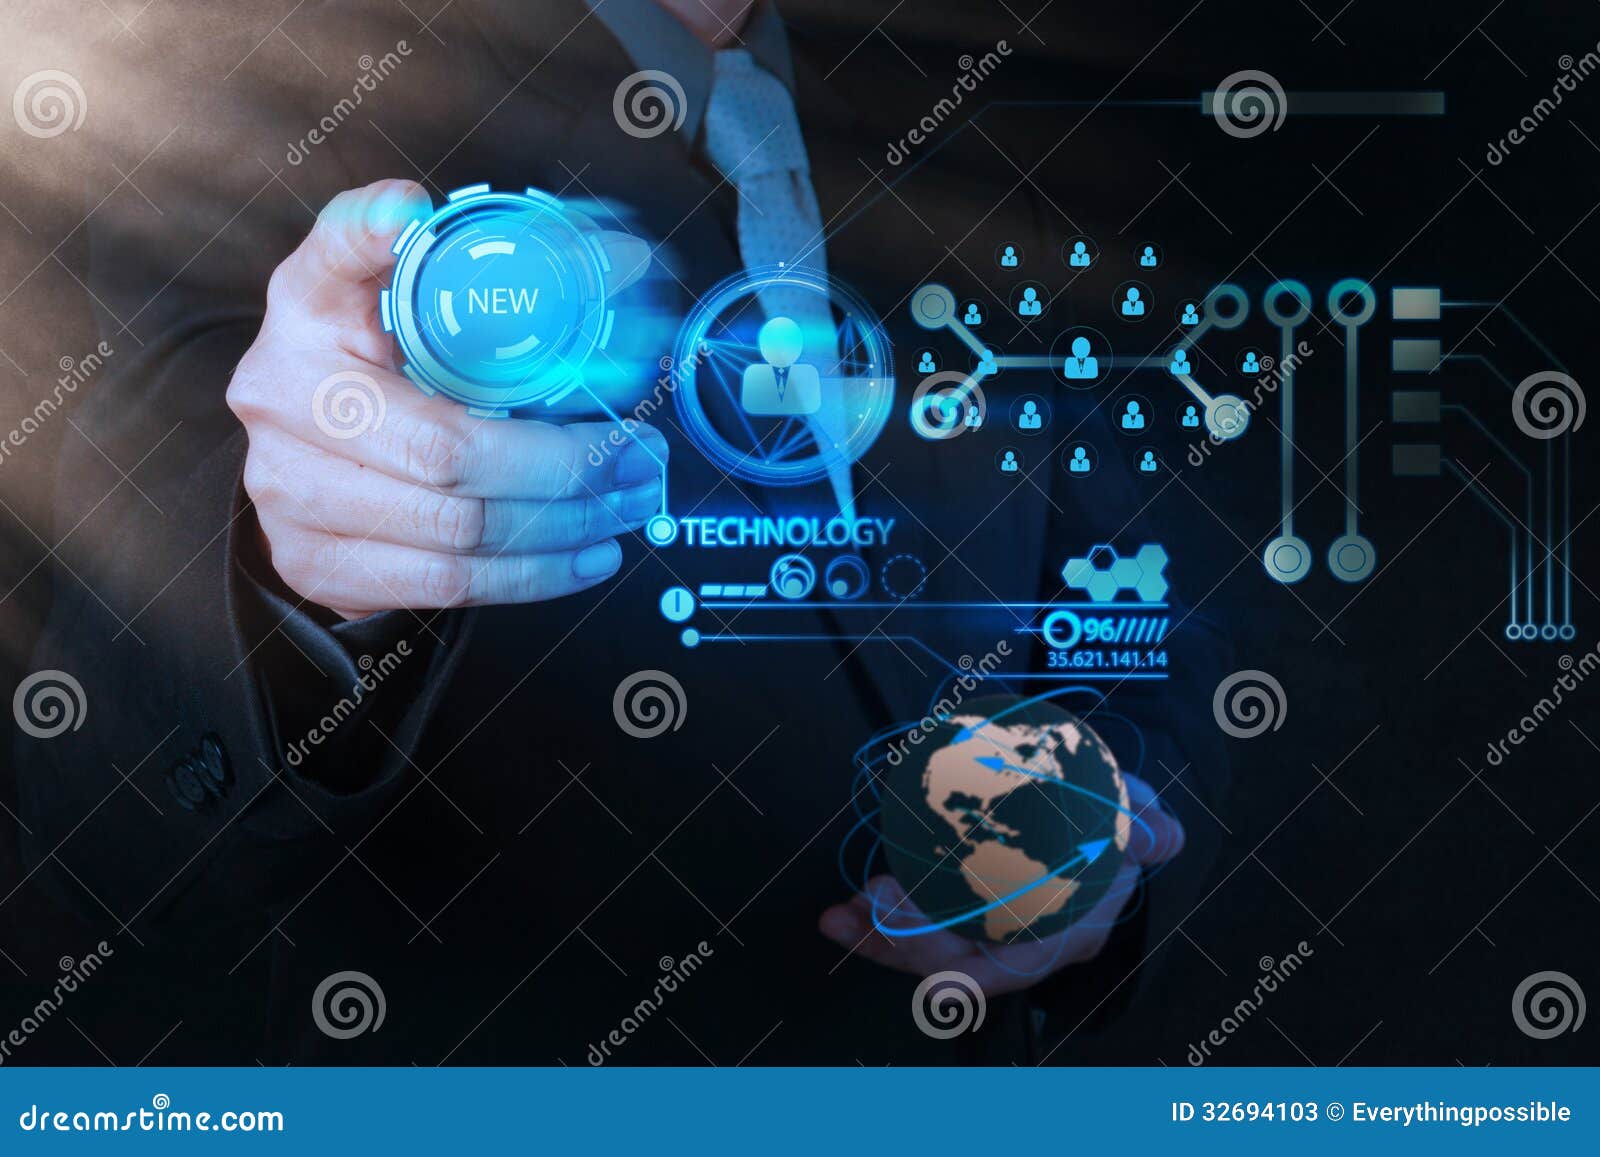 businessman hand pushing new technology button on modern comput